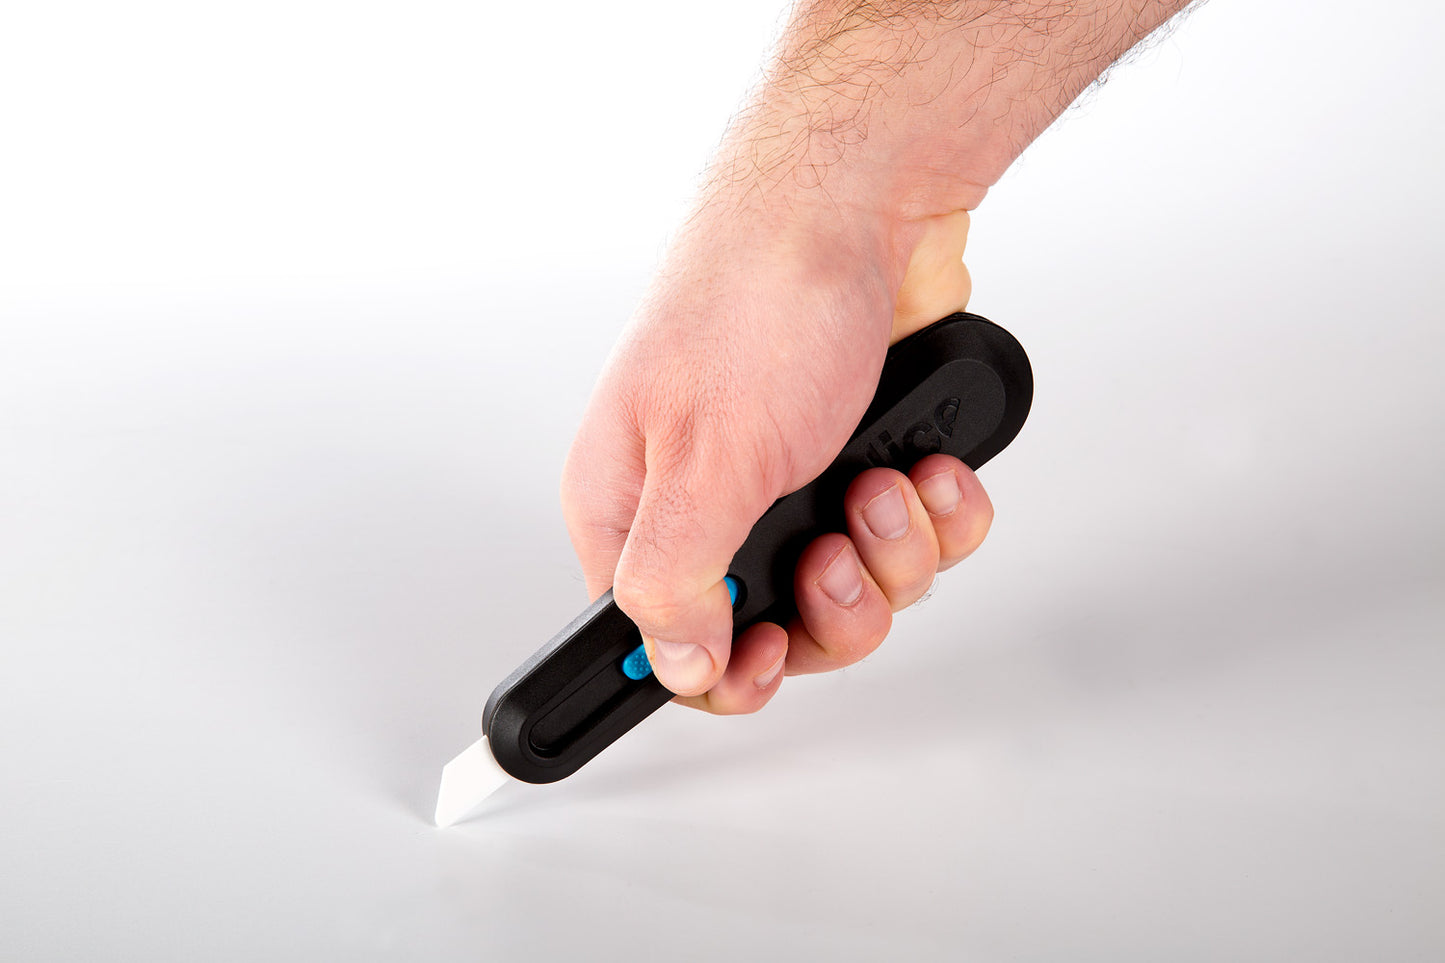 Slice Smart-Retracting Utility Knife - DaltonSafety